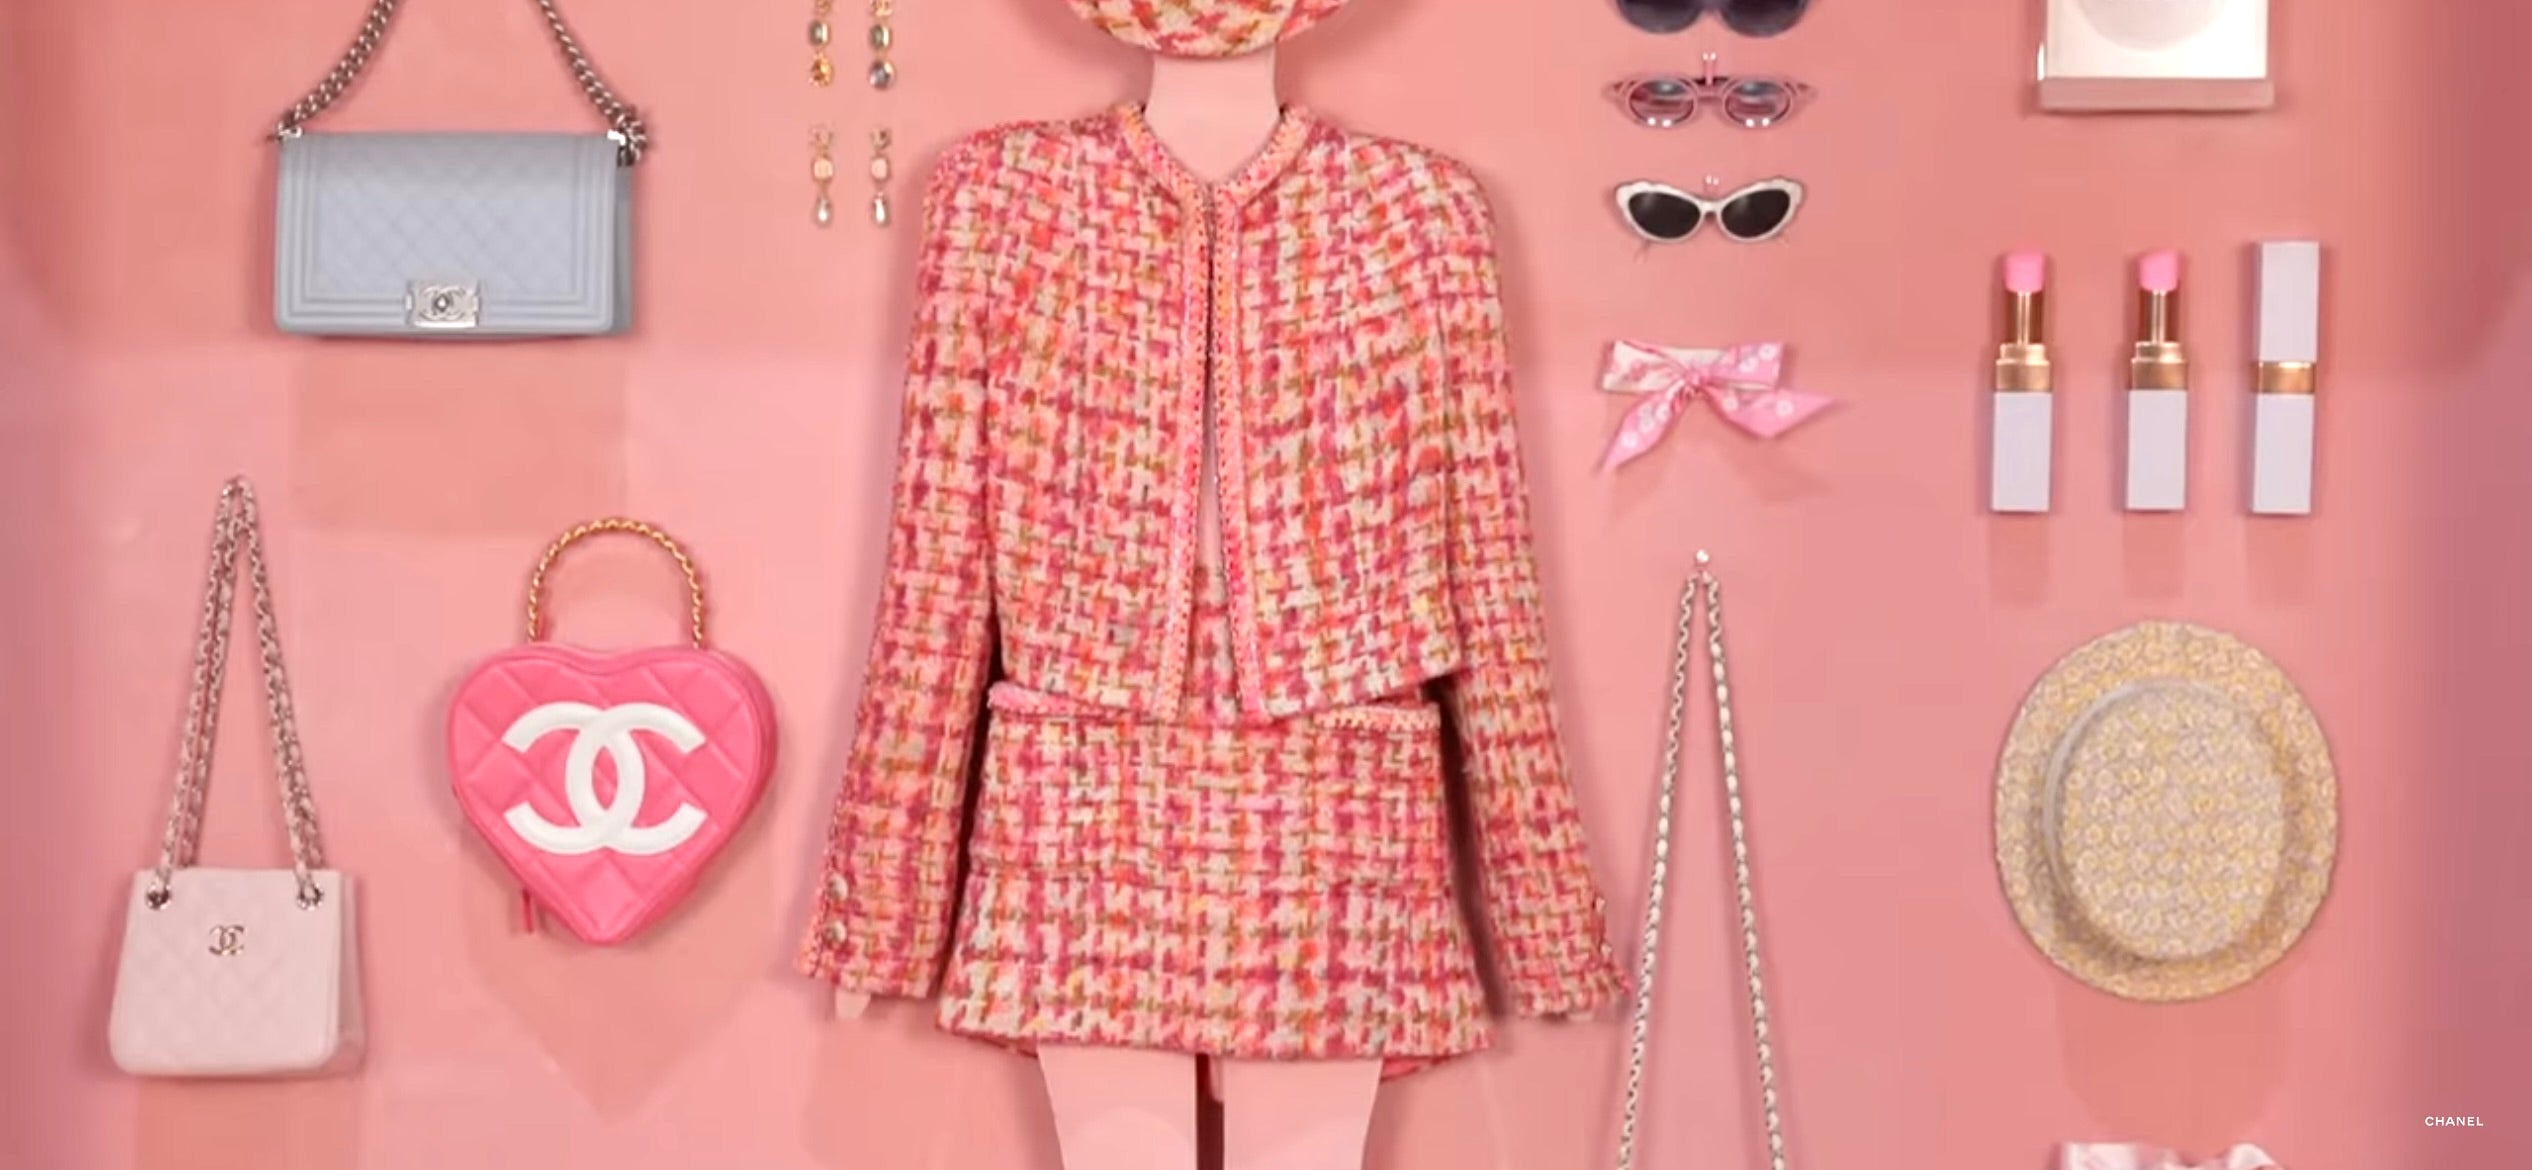 Barbie Movie Chanel fashion items